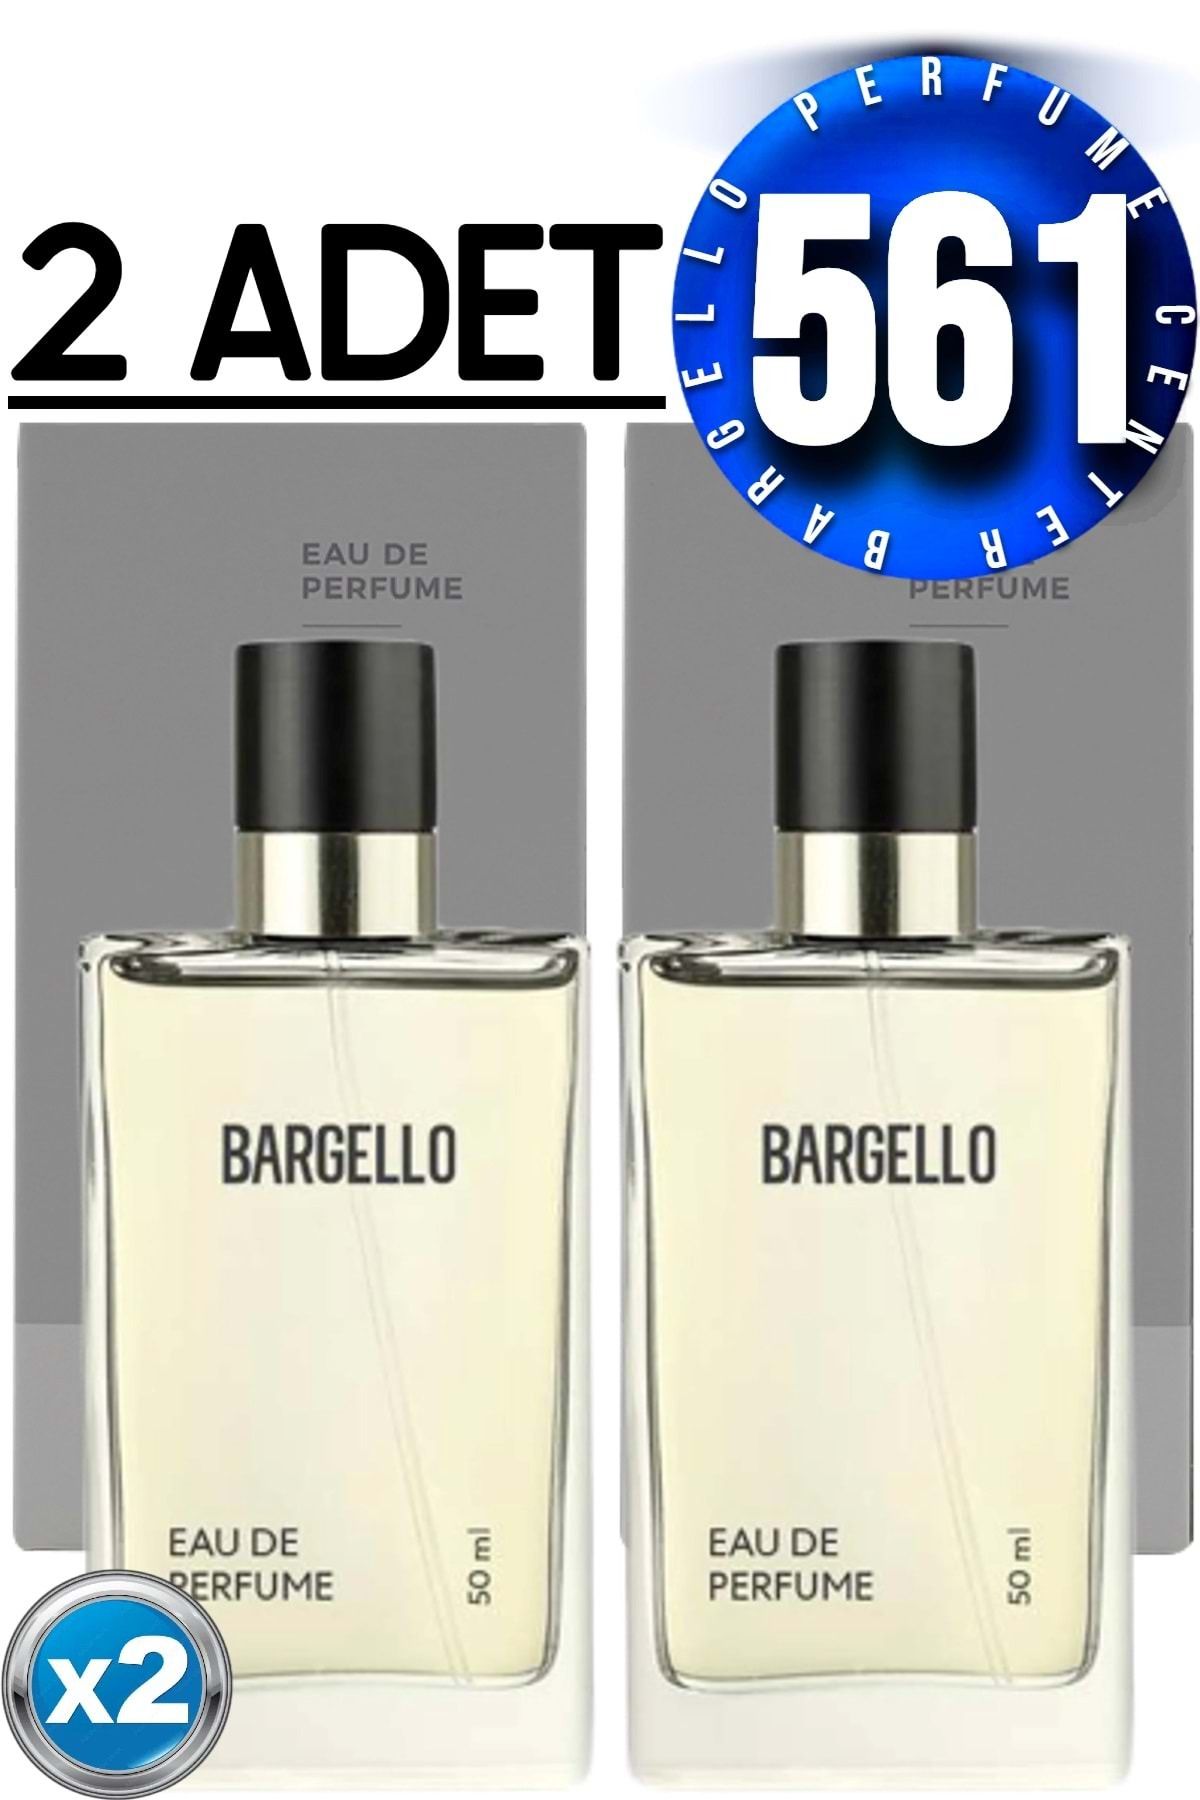 Bargello 561x2(2ADET) Erkek Parfüm Fresh 50 ml Edp